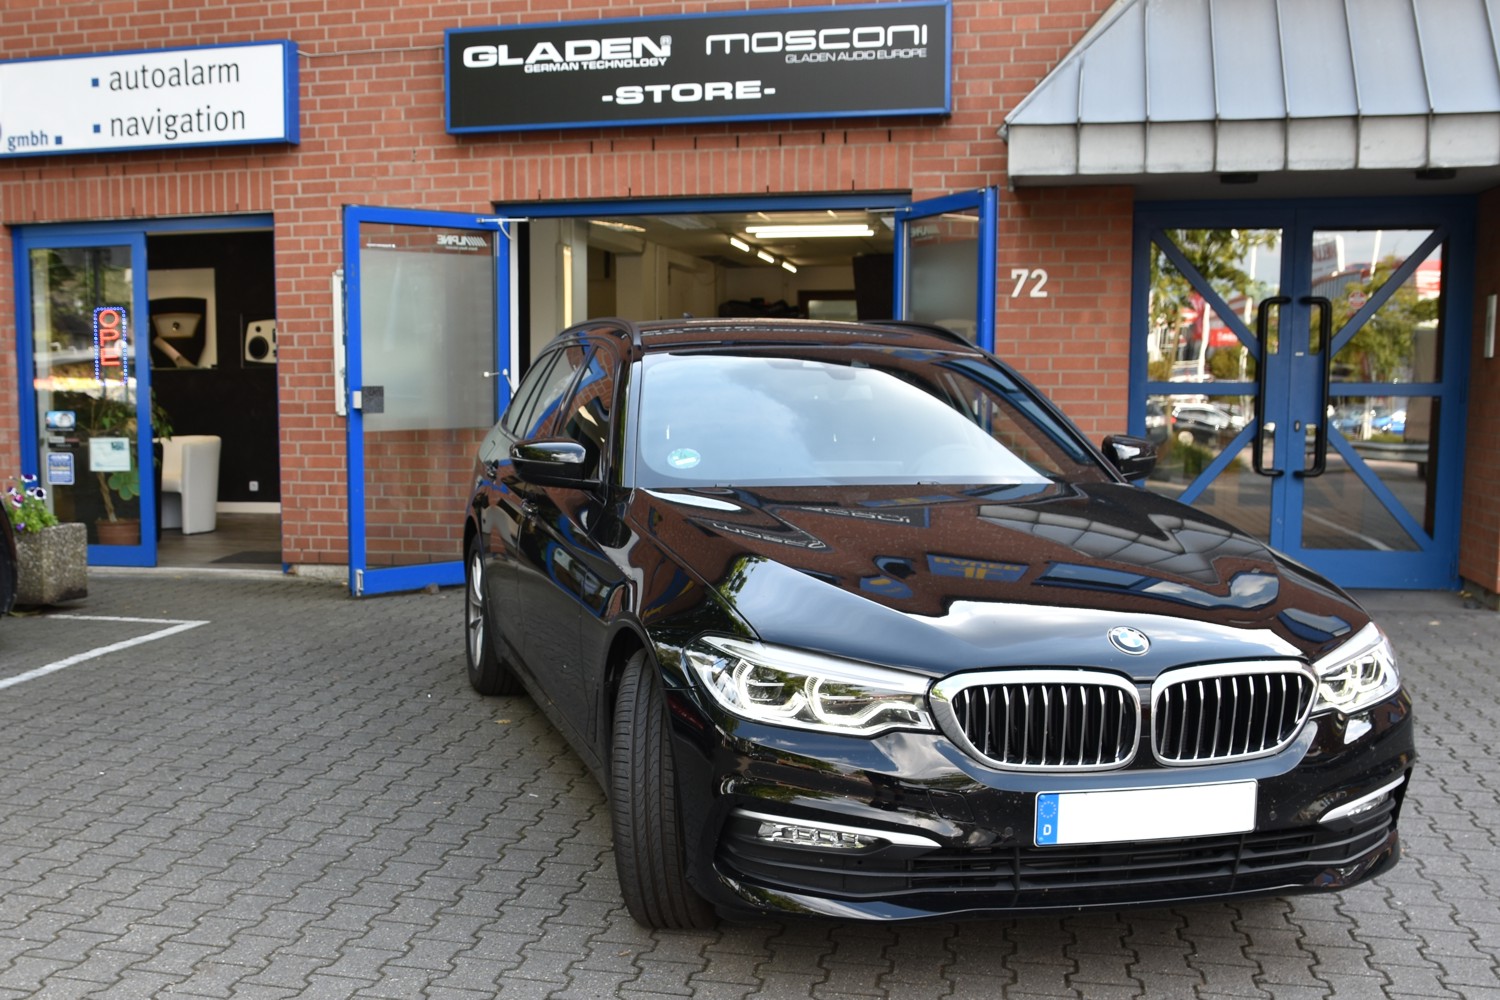 BMW 5er G30 Soundsystem Hifi Gladen Mosconi Auto